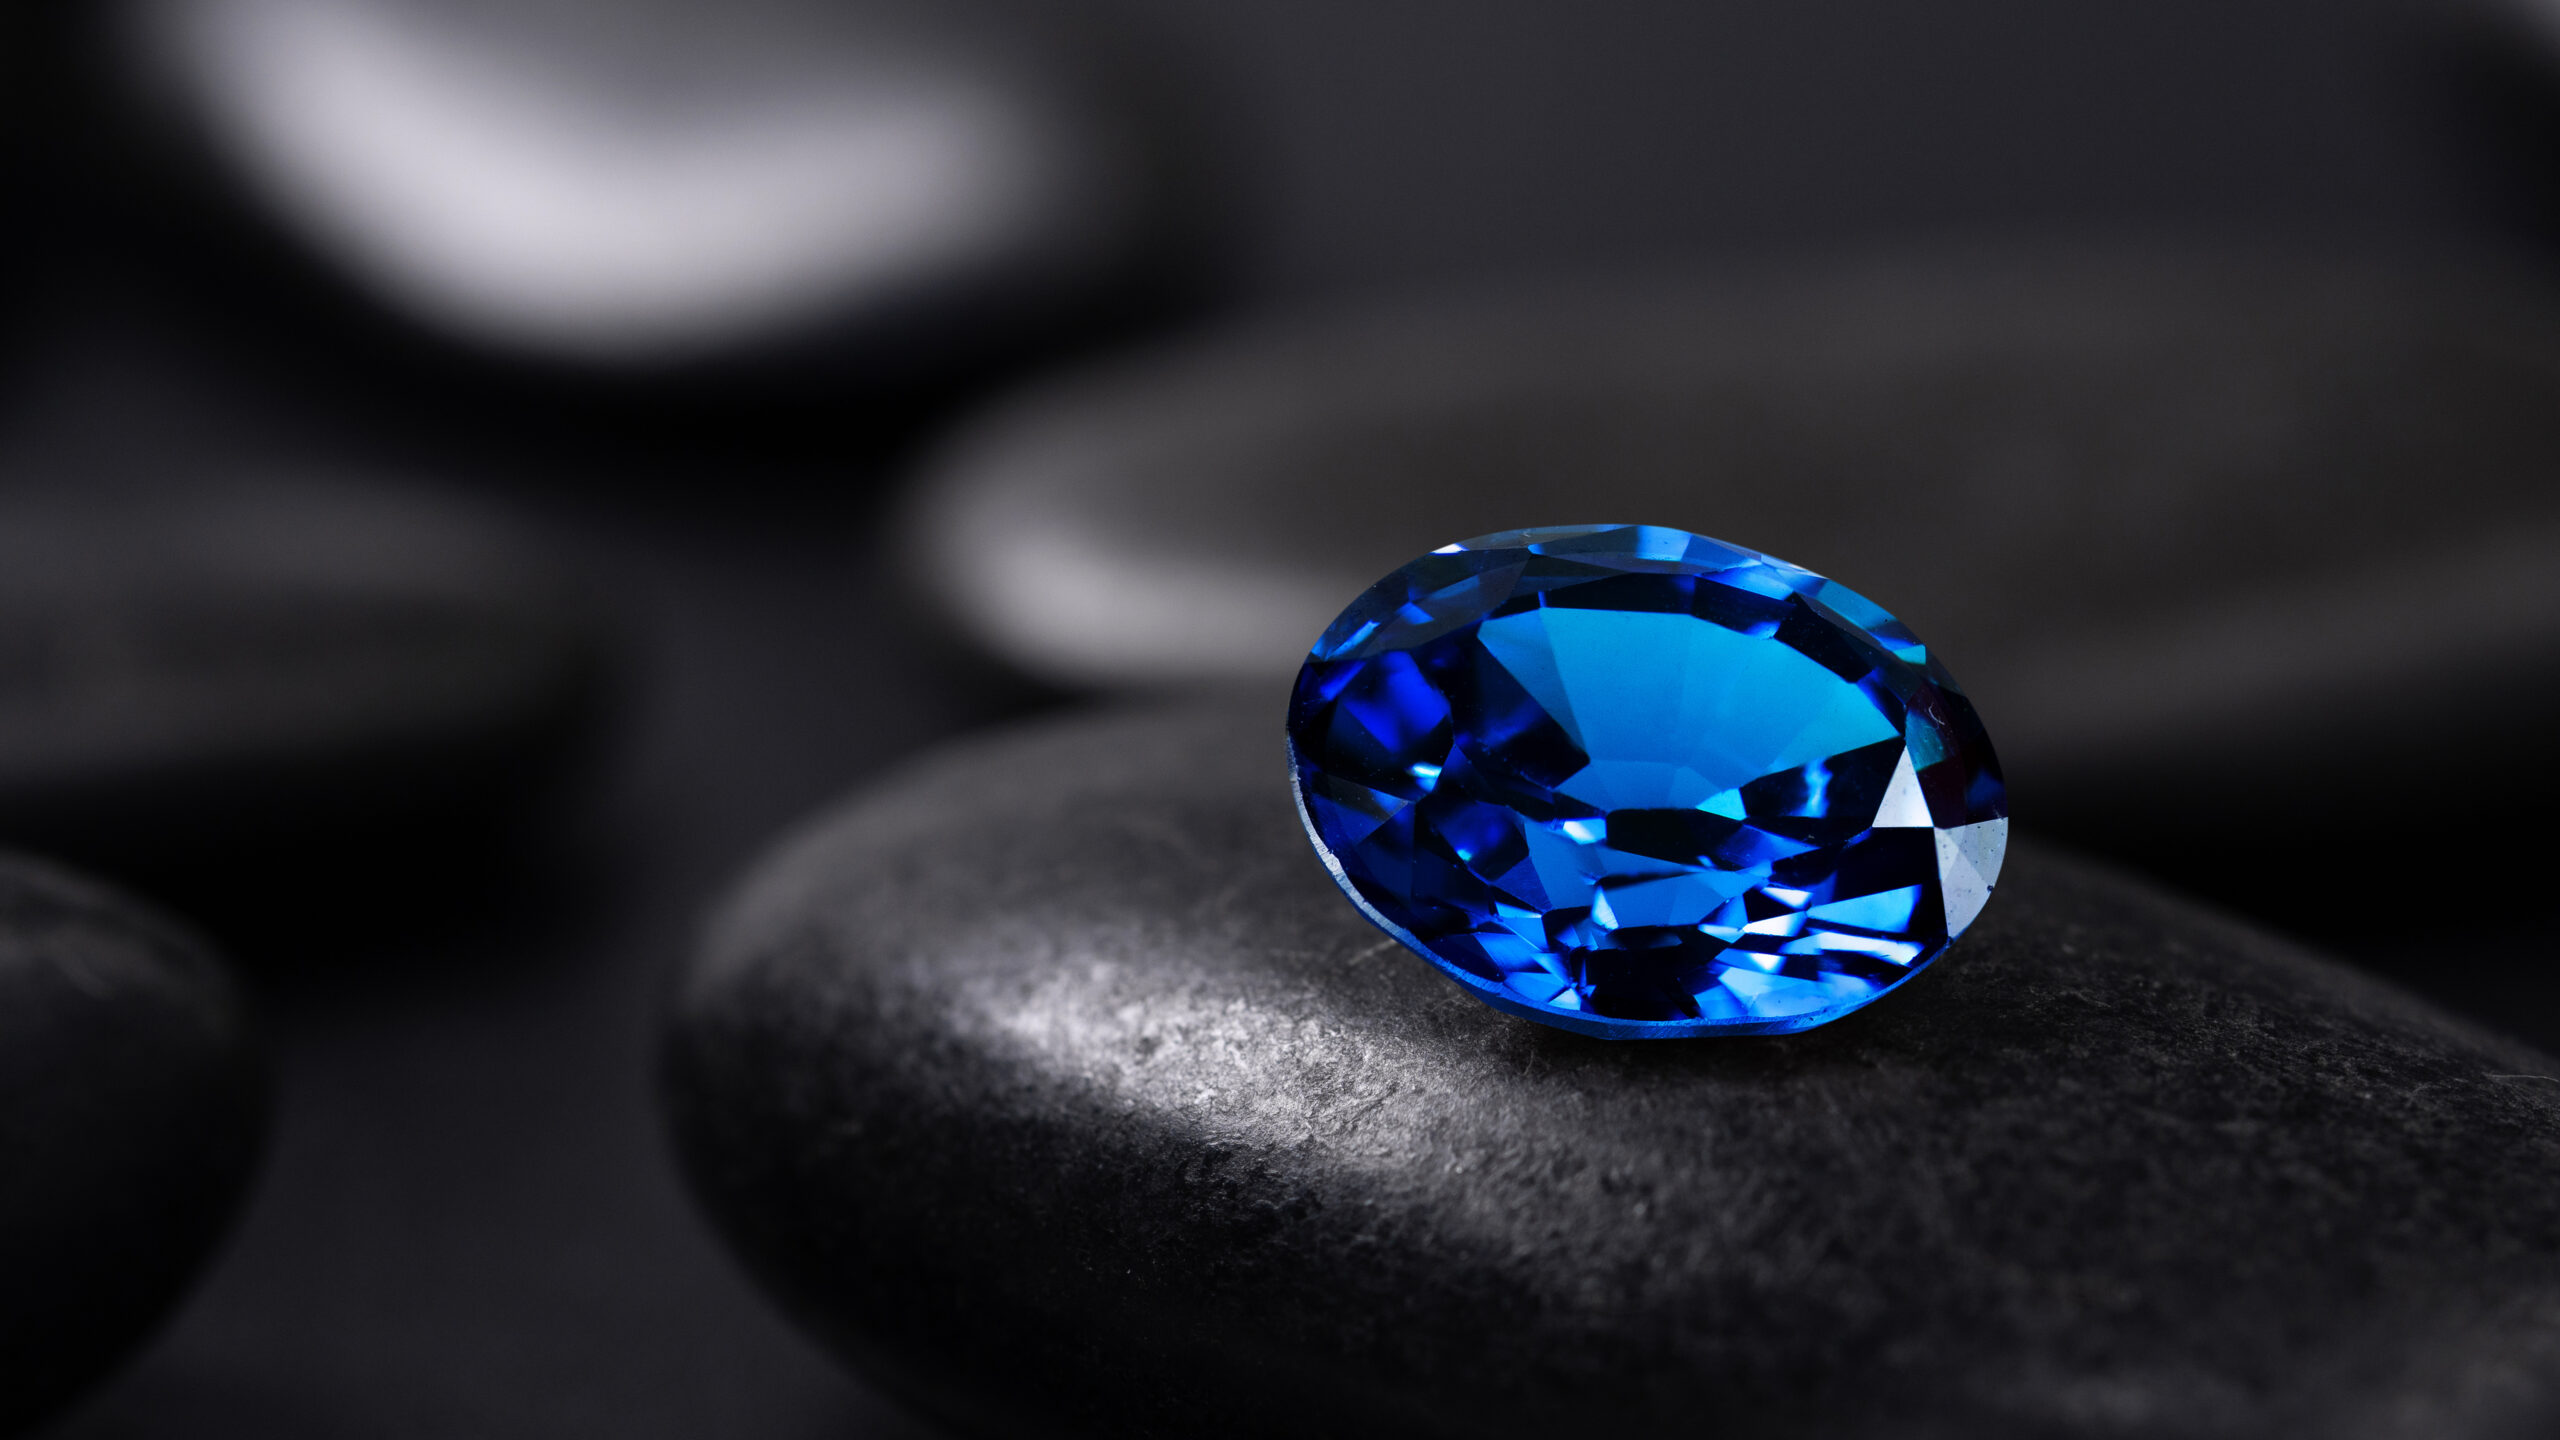 Is Sapphire a spiritual stone?